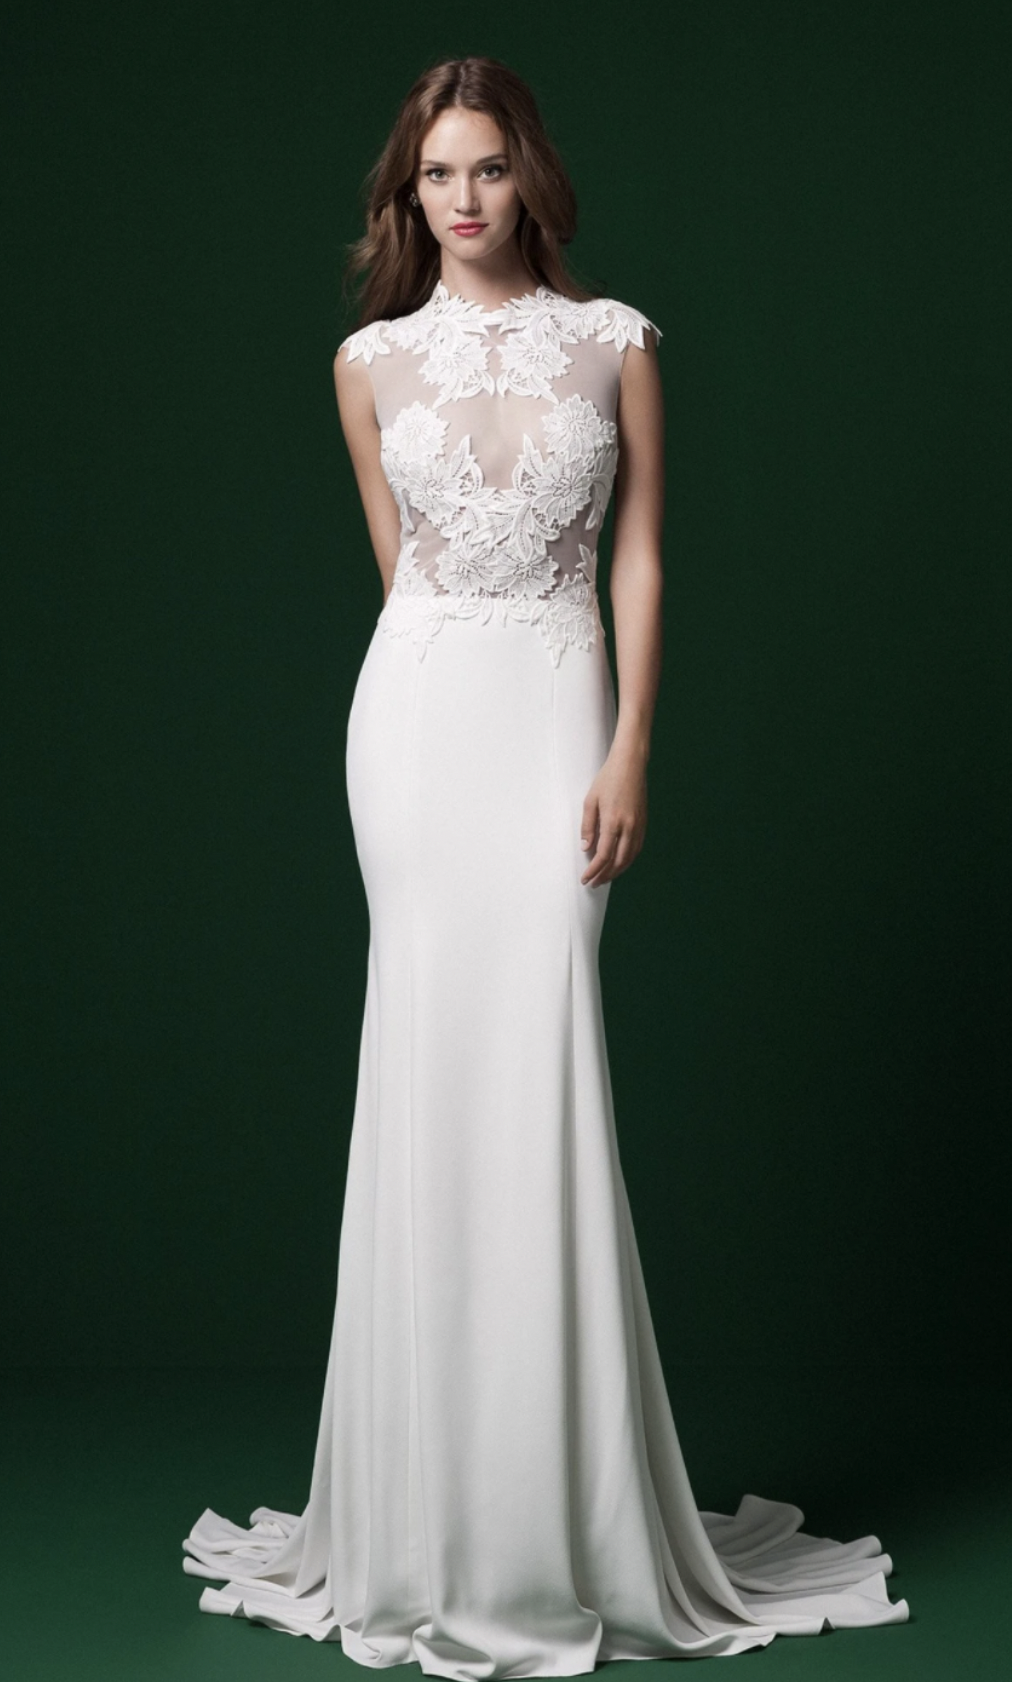 Stylish Wedding Gowns under $2,000 at Covet Bridal Image